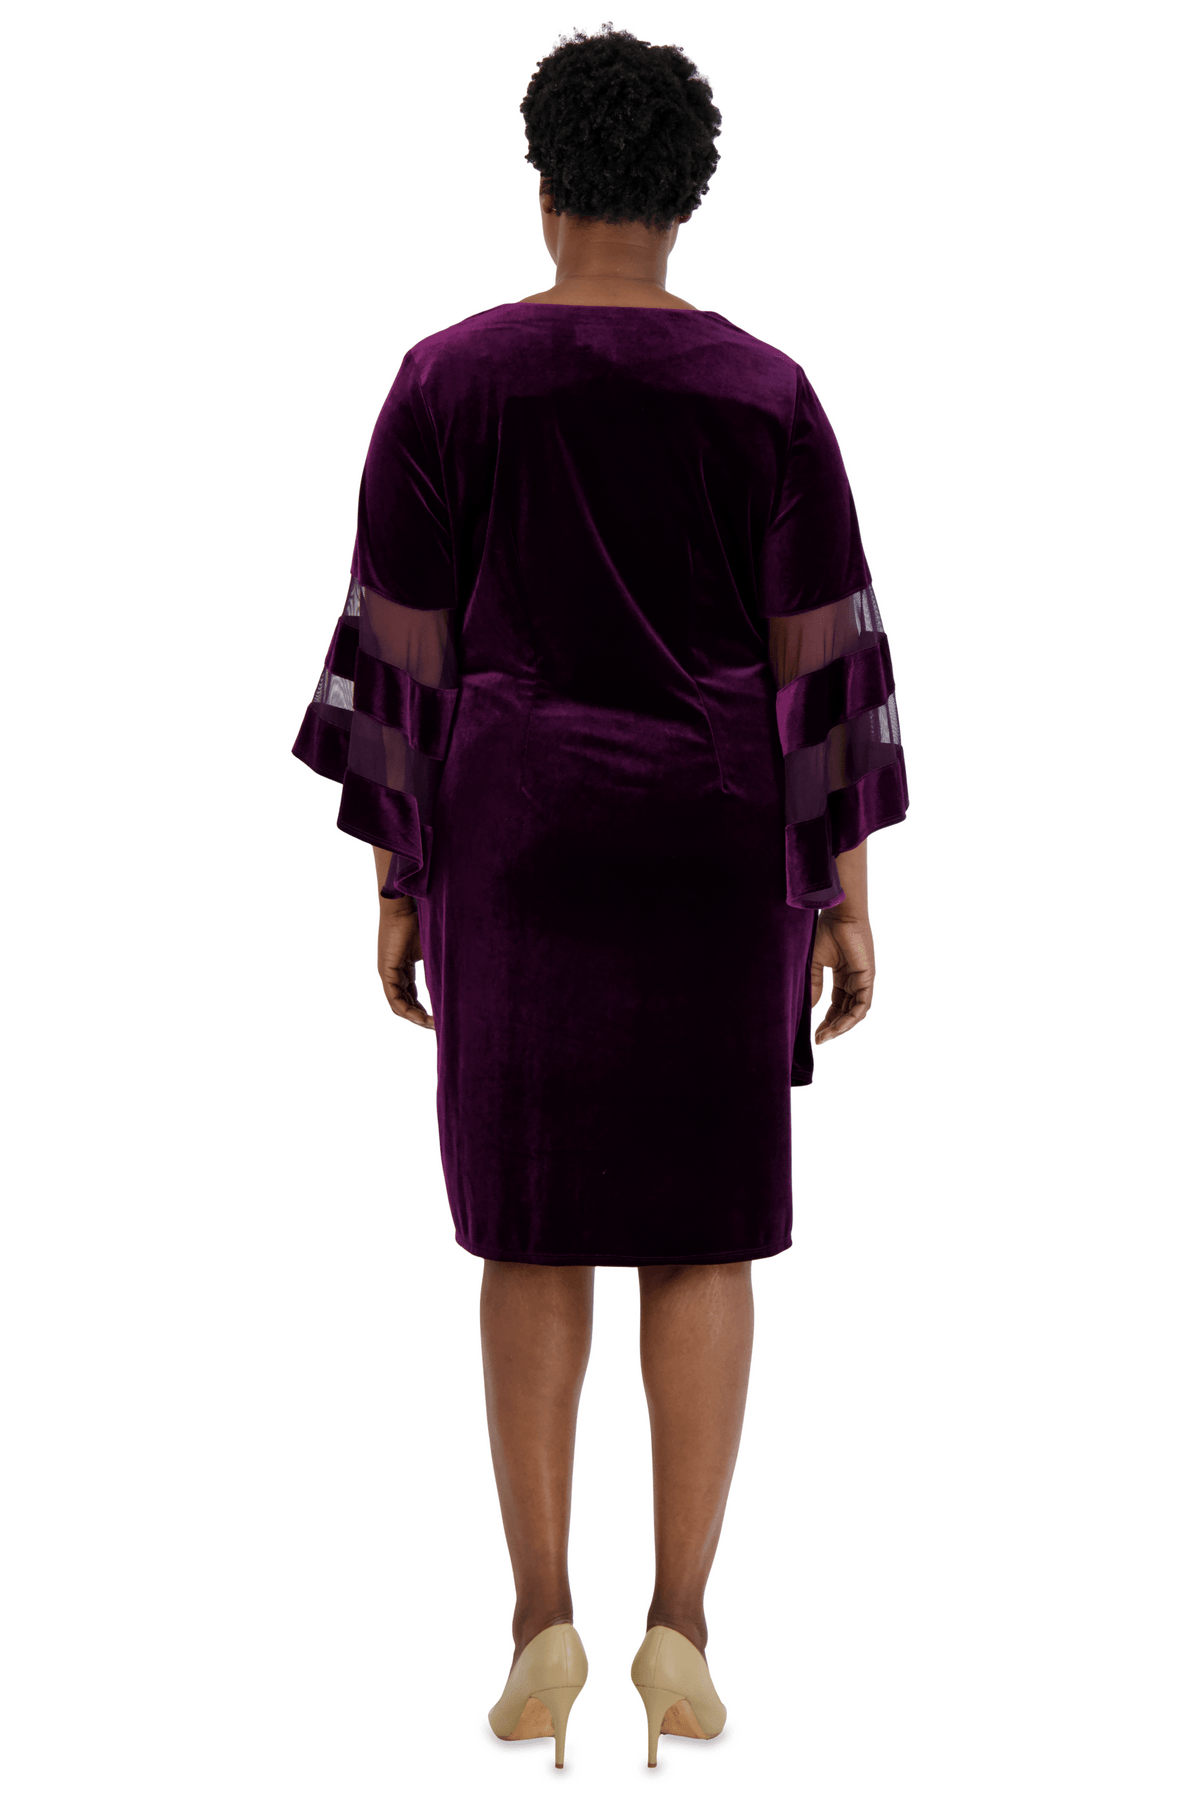 R&M Richards Formal Short Plus Size Dress 5471W - The Dress Outlet